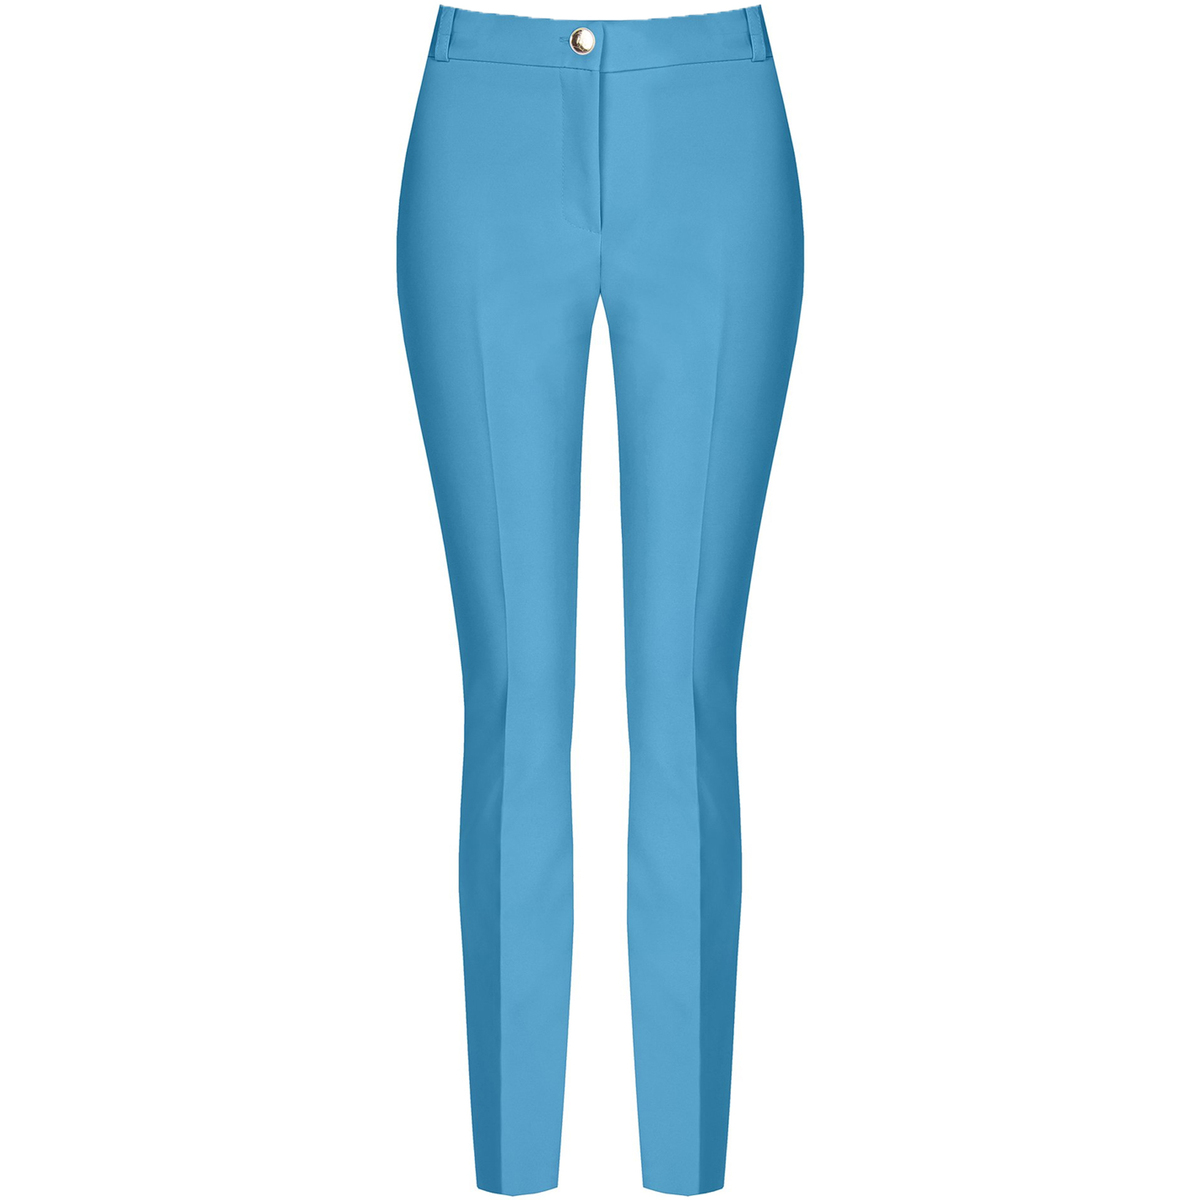 Abbigliamento Donna Pantaloni 5 tasche Rinascimento CFC0114968003 Blu